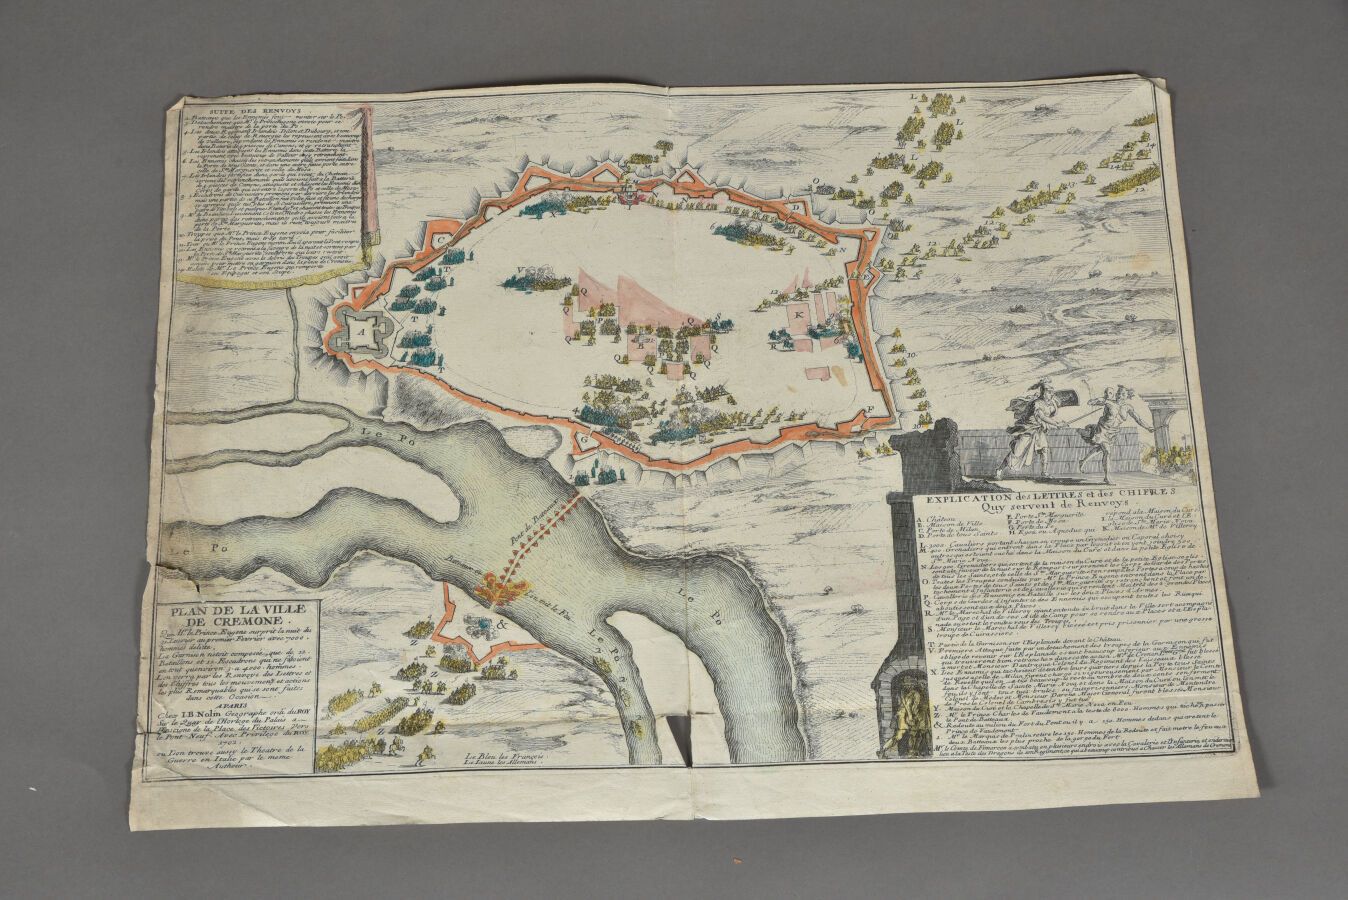 Null JEAN-BAPTISTE NOLIN (1657 - 1708)
Plan de la ville de Crémone. 
1702.
Gravu&hellip;